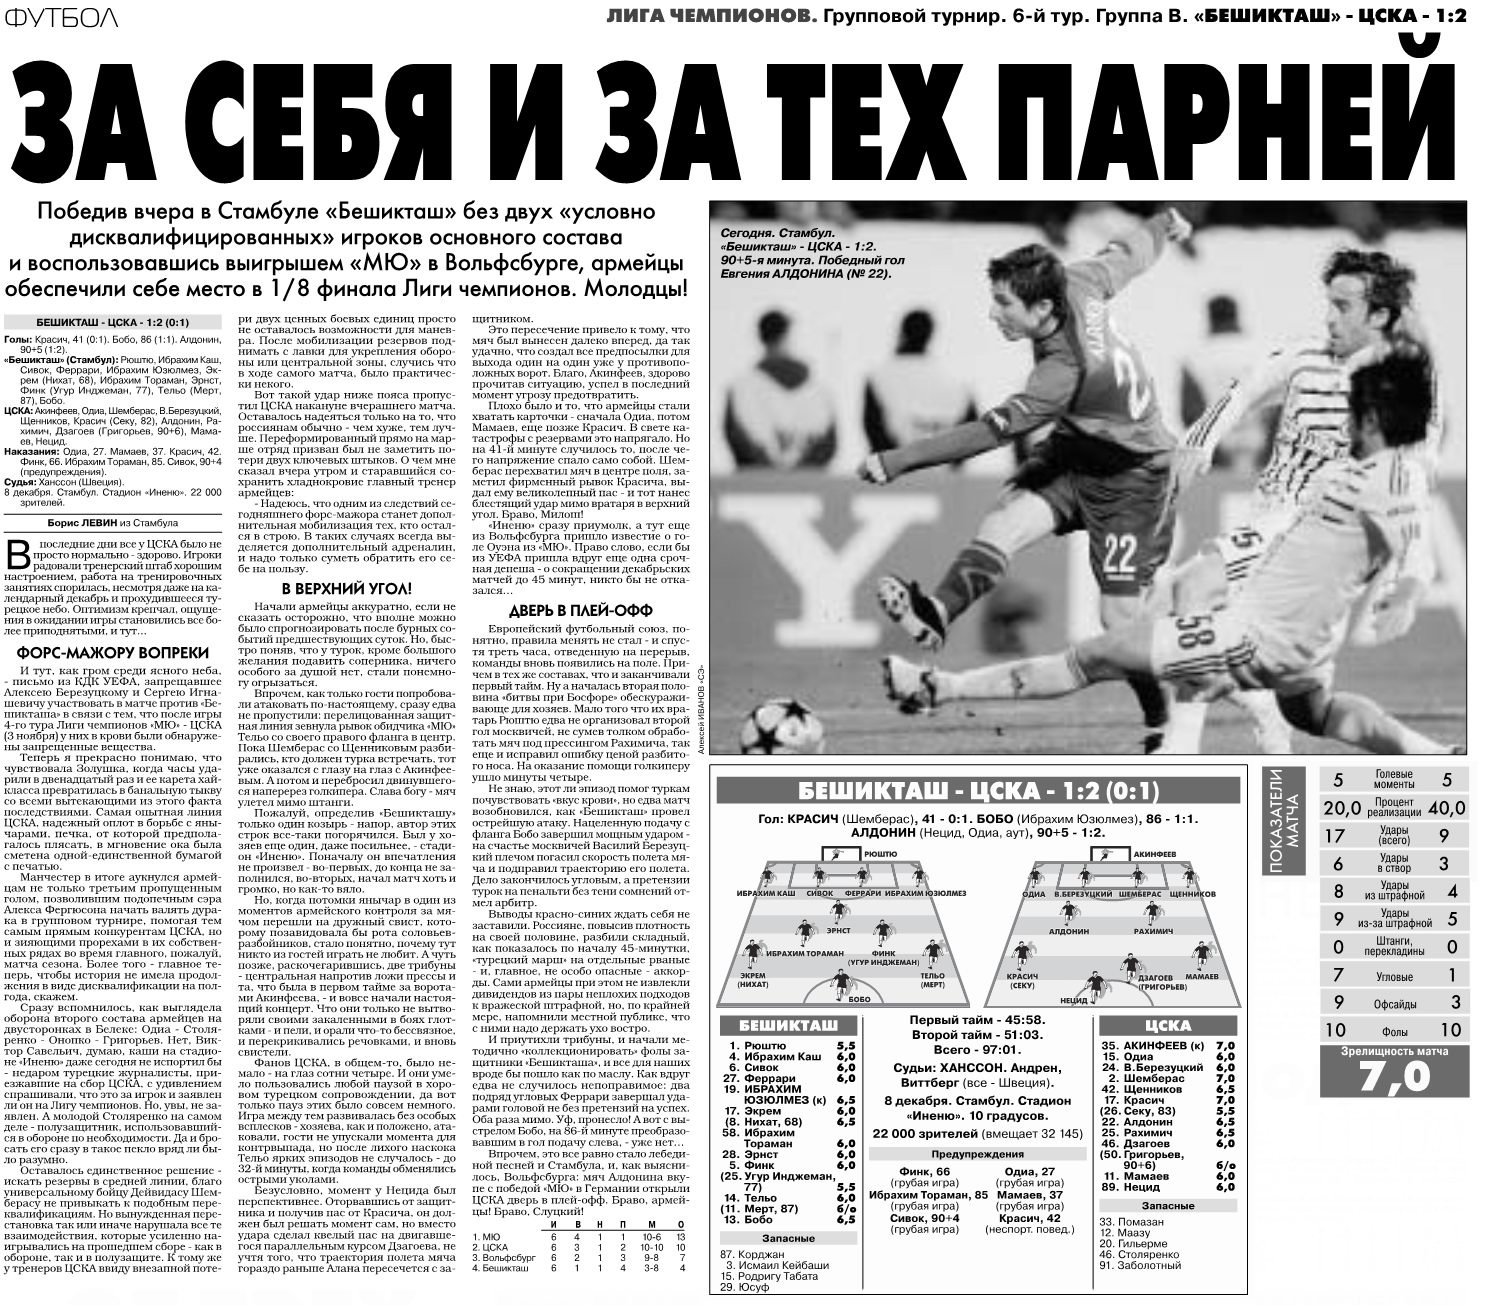 2009-12-08.Beshiktash-CSKA.jpg